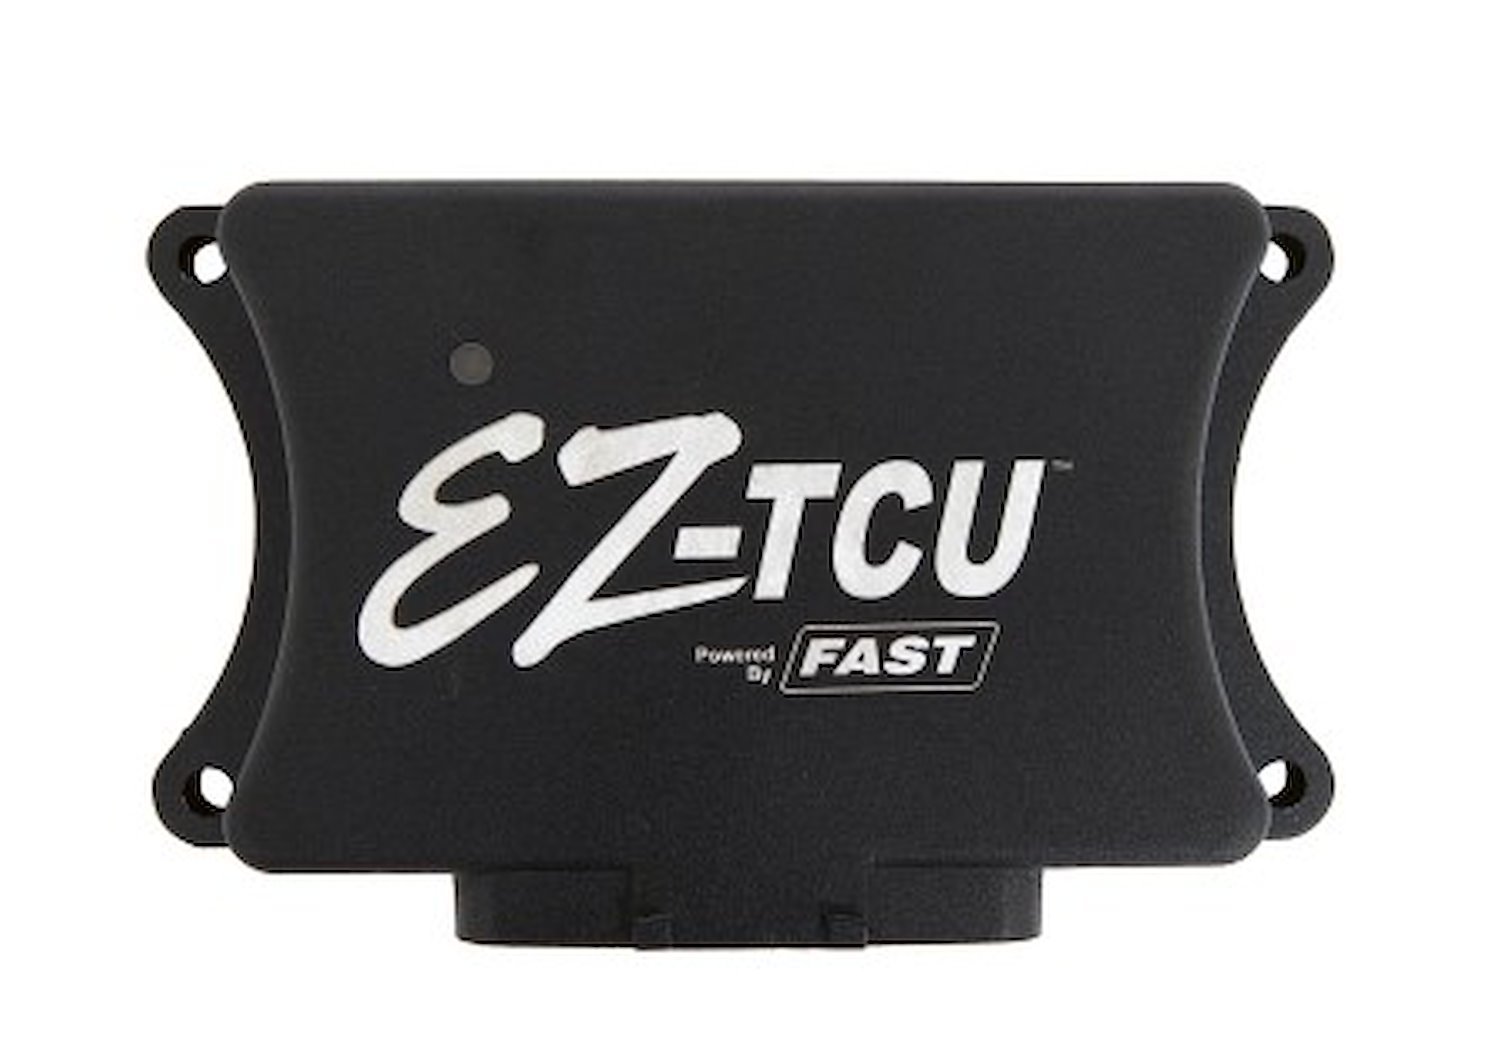 EZ-TCU Hand-Held Main Controller Only